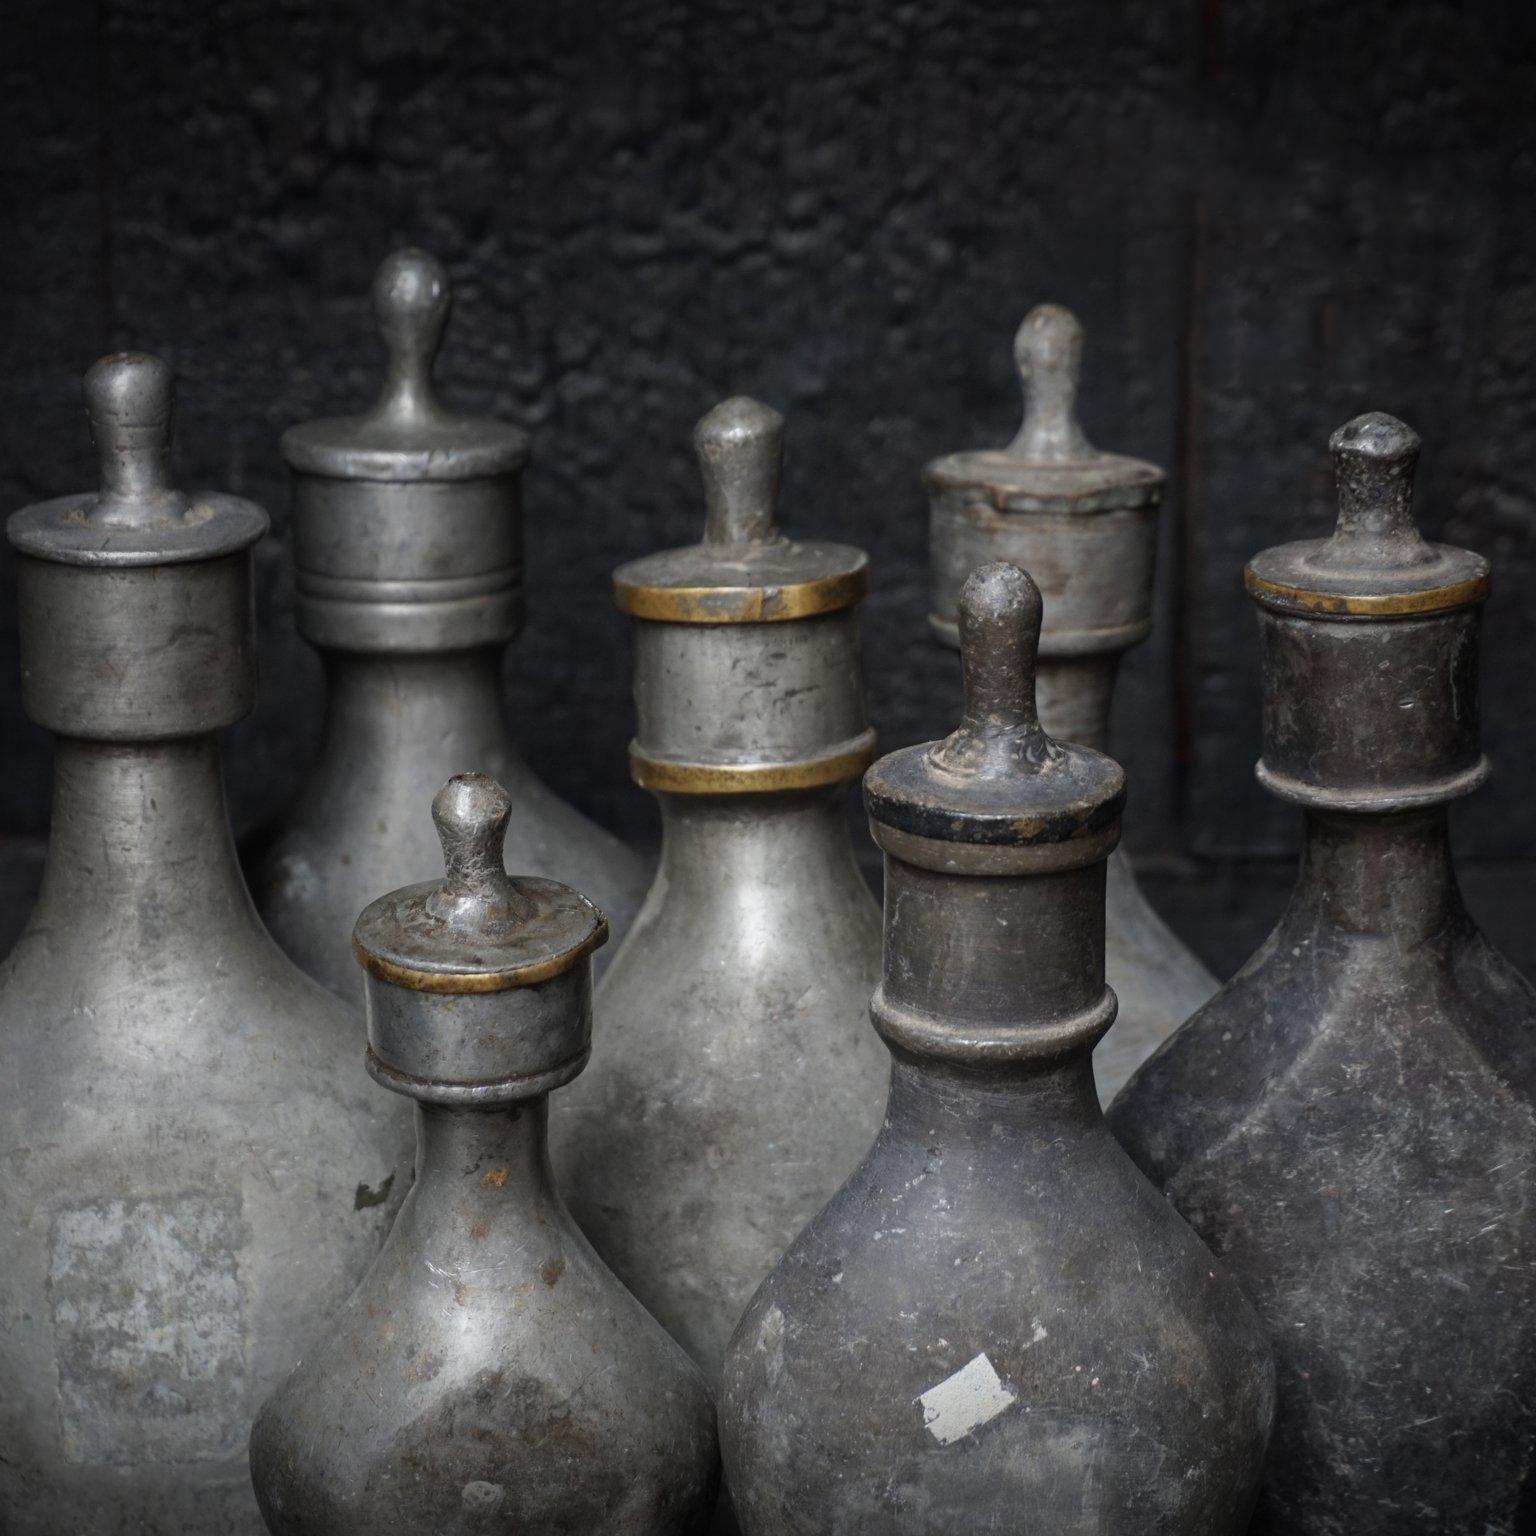 18th century bottles